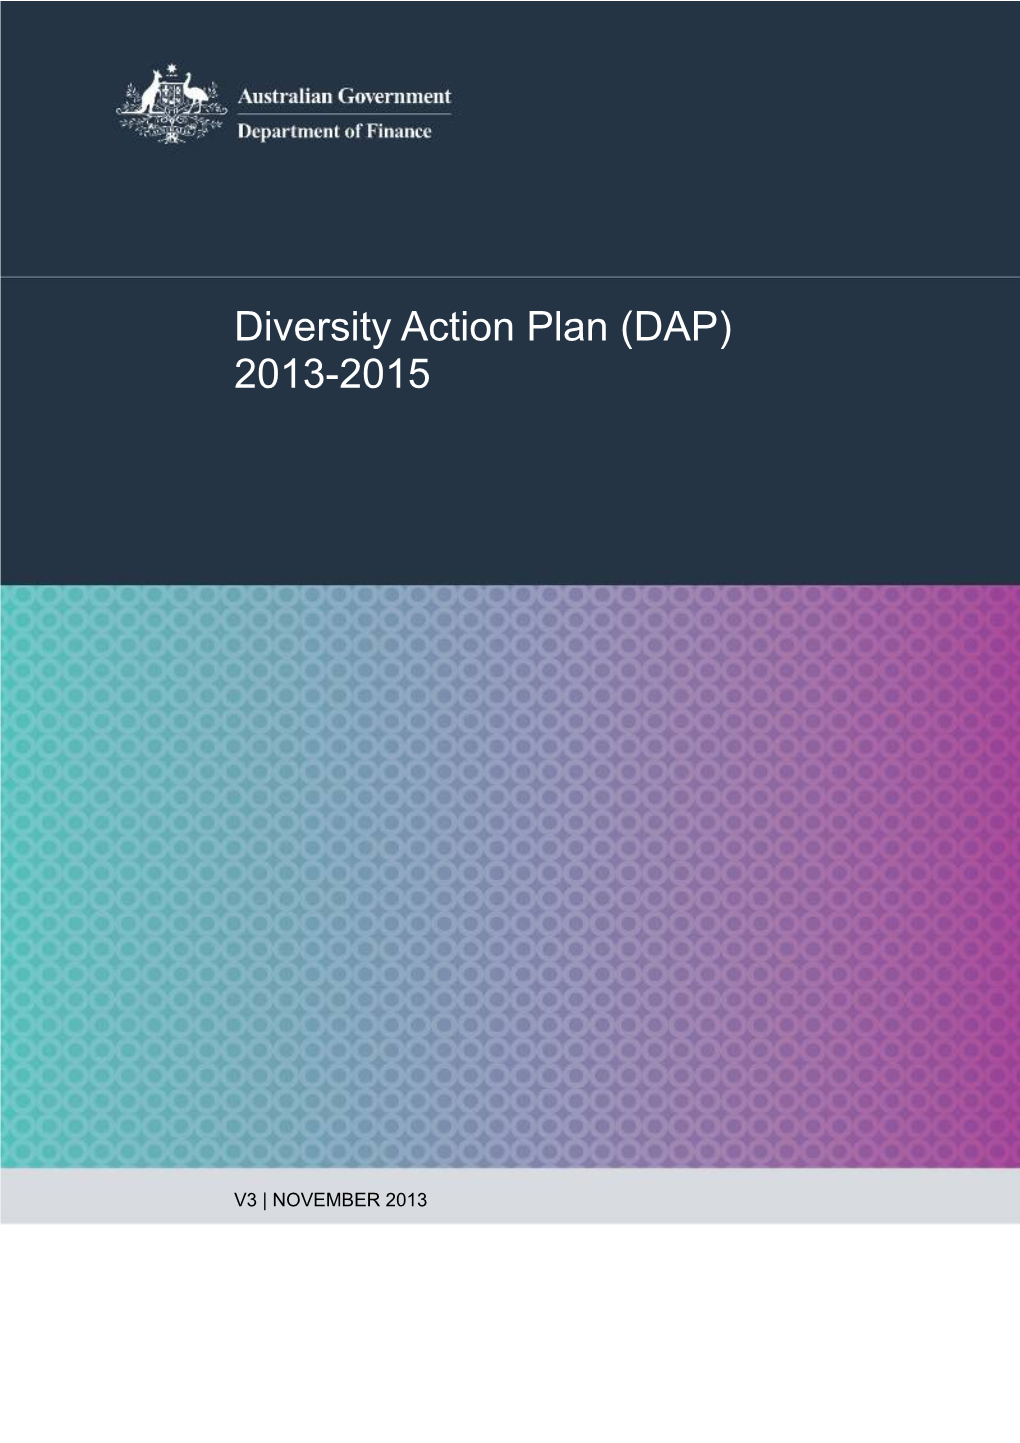 Diversity Action Plan 2013-2015